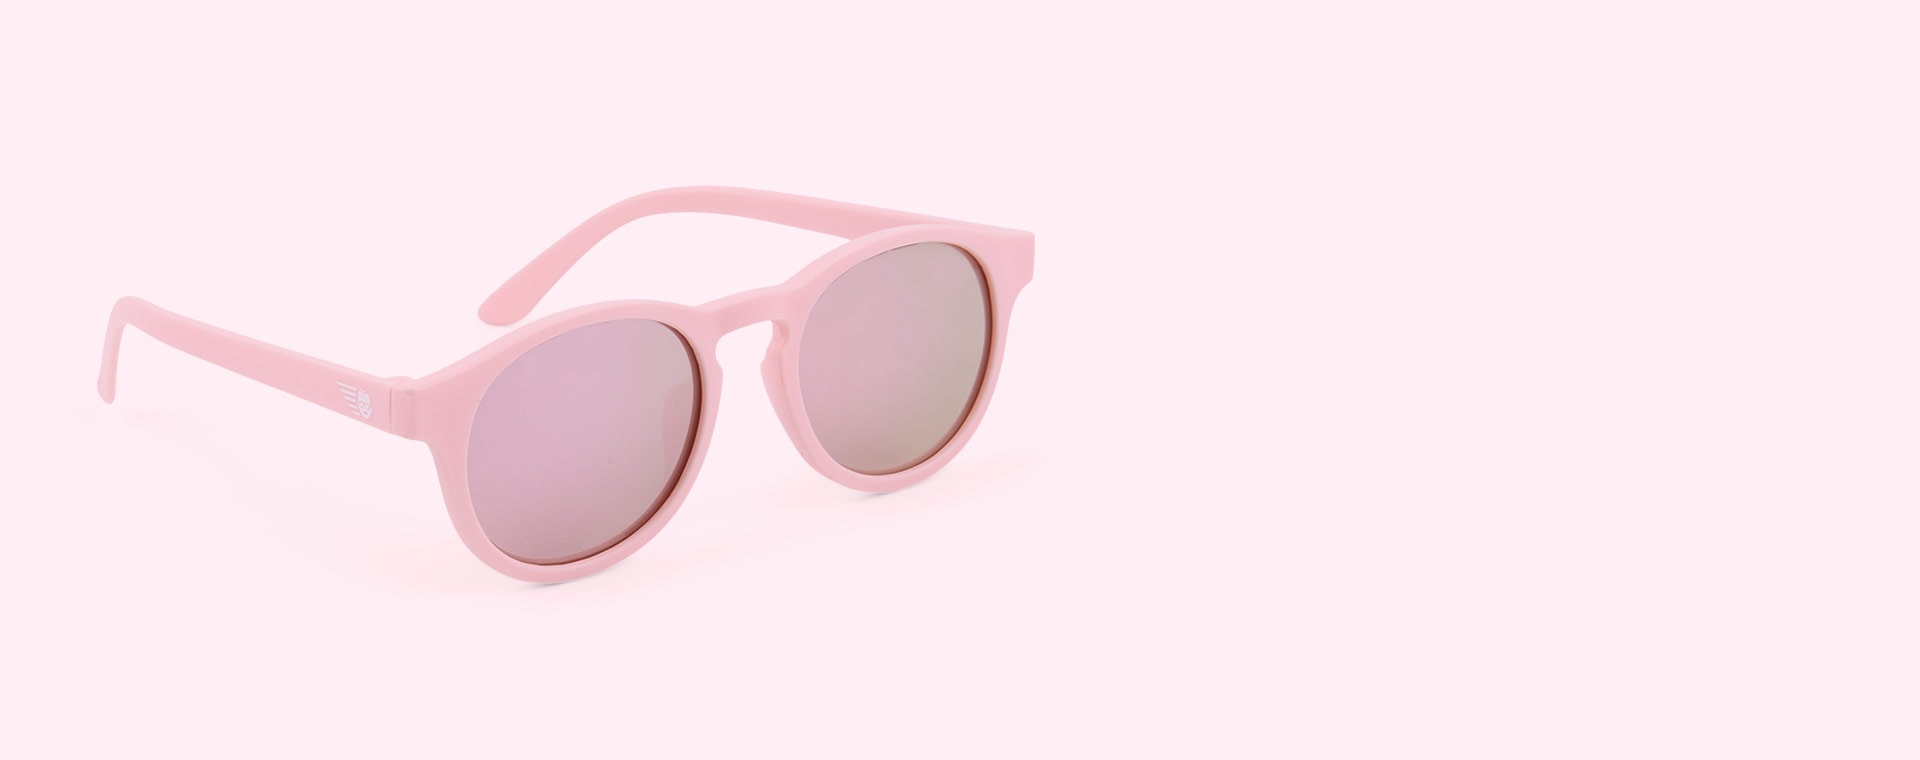 The Darling Babiators Keyhole Sunglasses